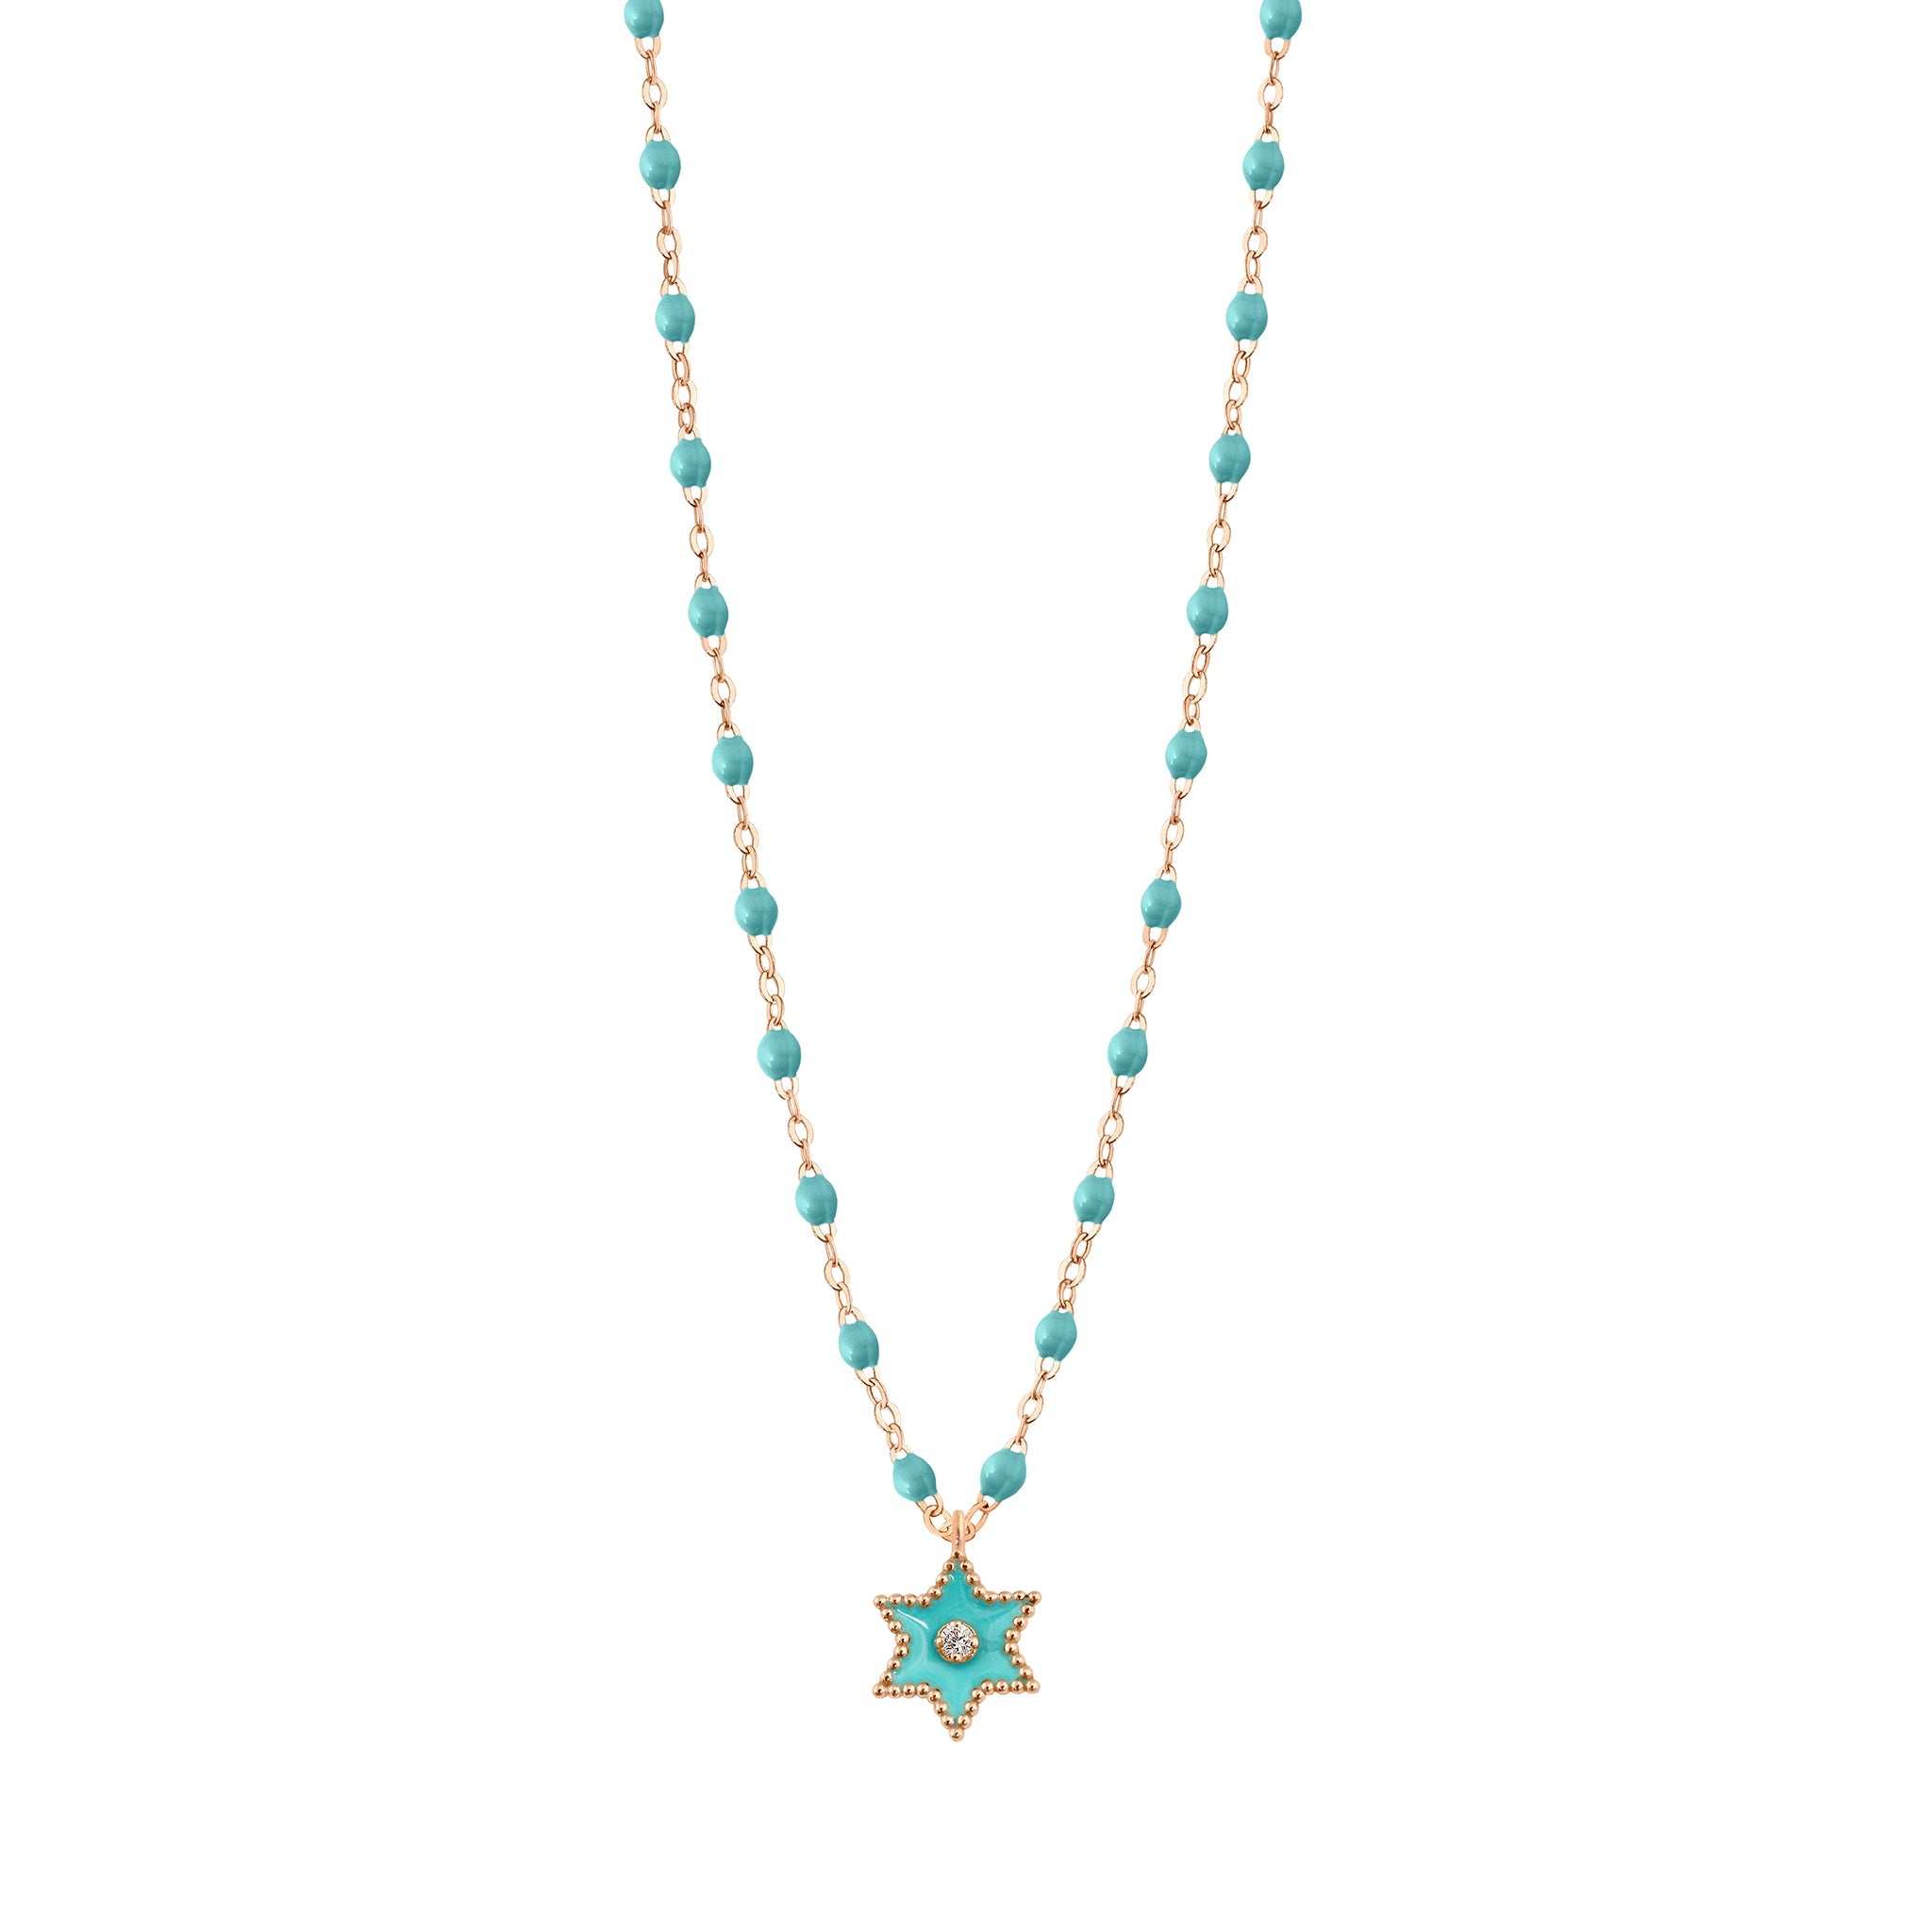 Collier Etoile Star résine turquoise vert, diamant, or rose, 42 cm pirate Référence :  b1st001r3342di -1